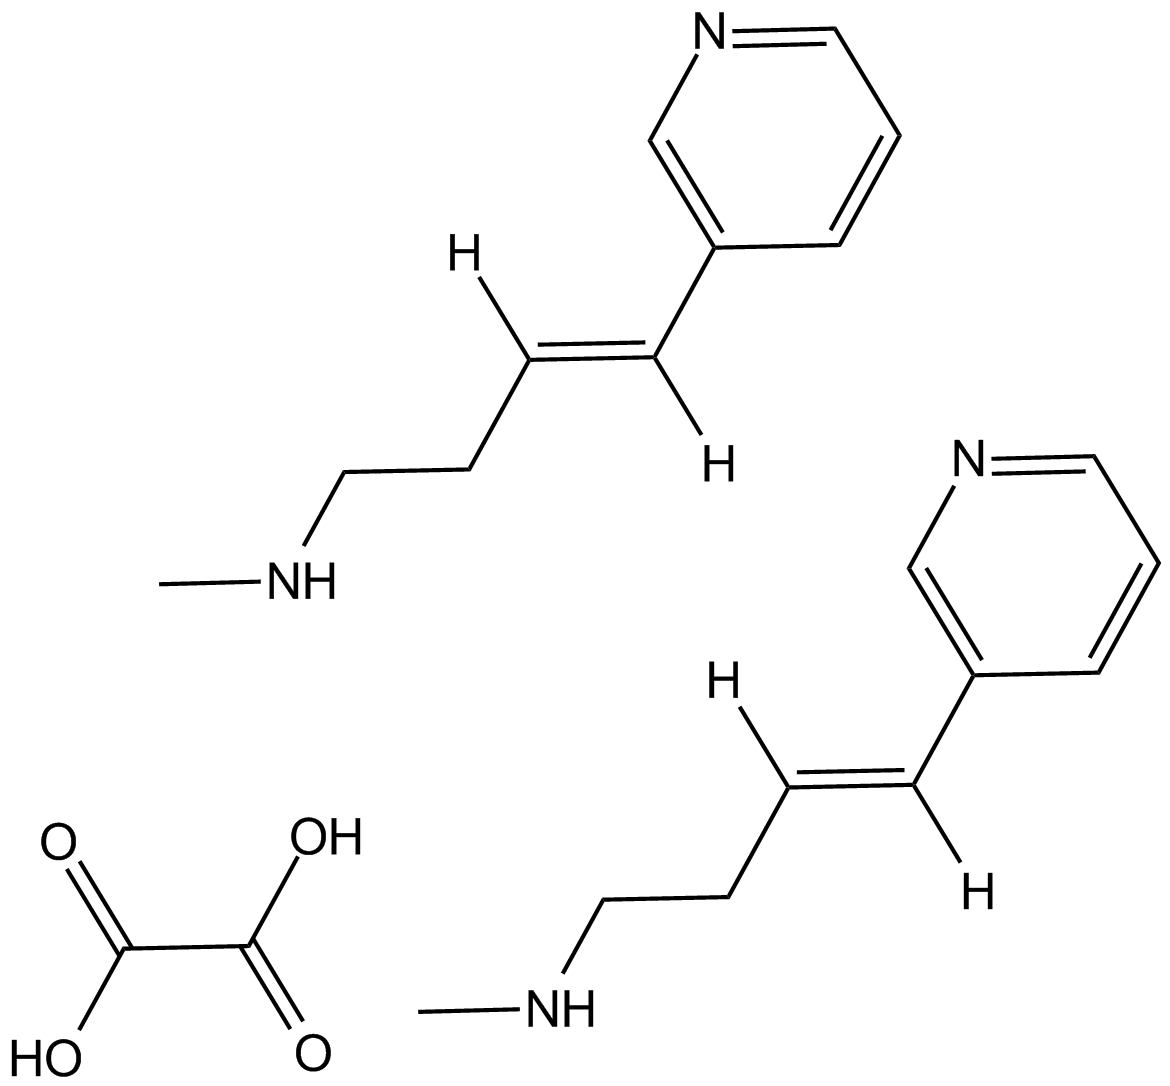 RJR-2403 hemioxalate  Chemical Structure